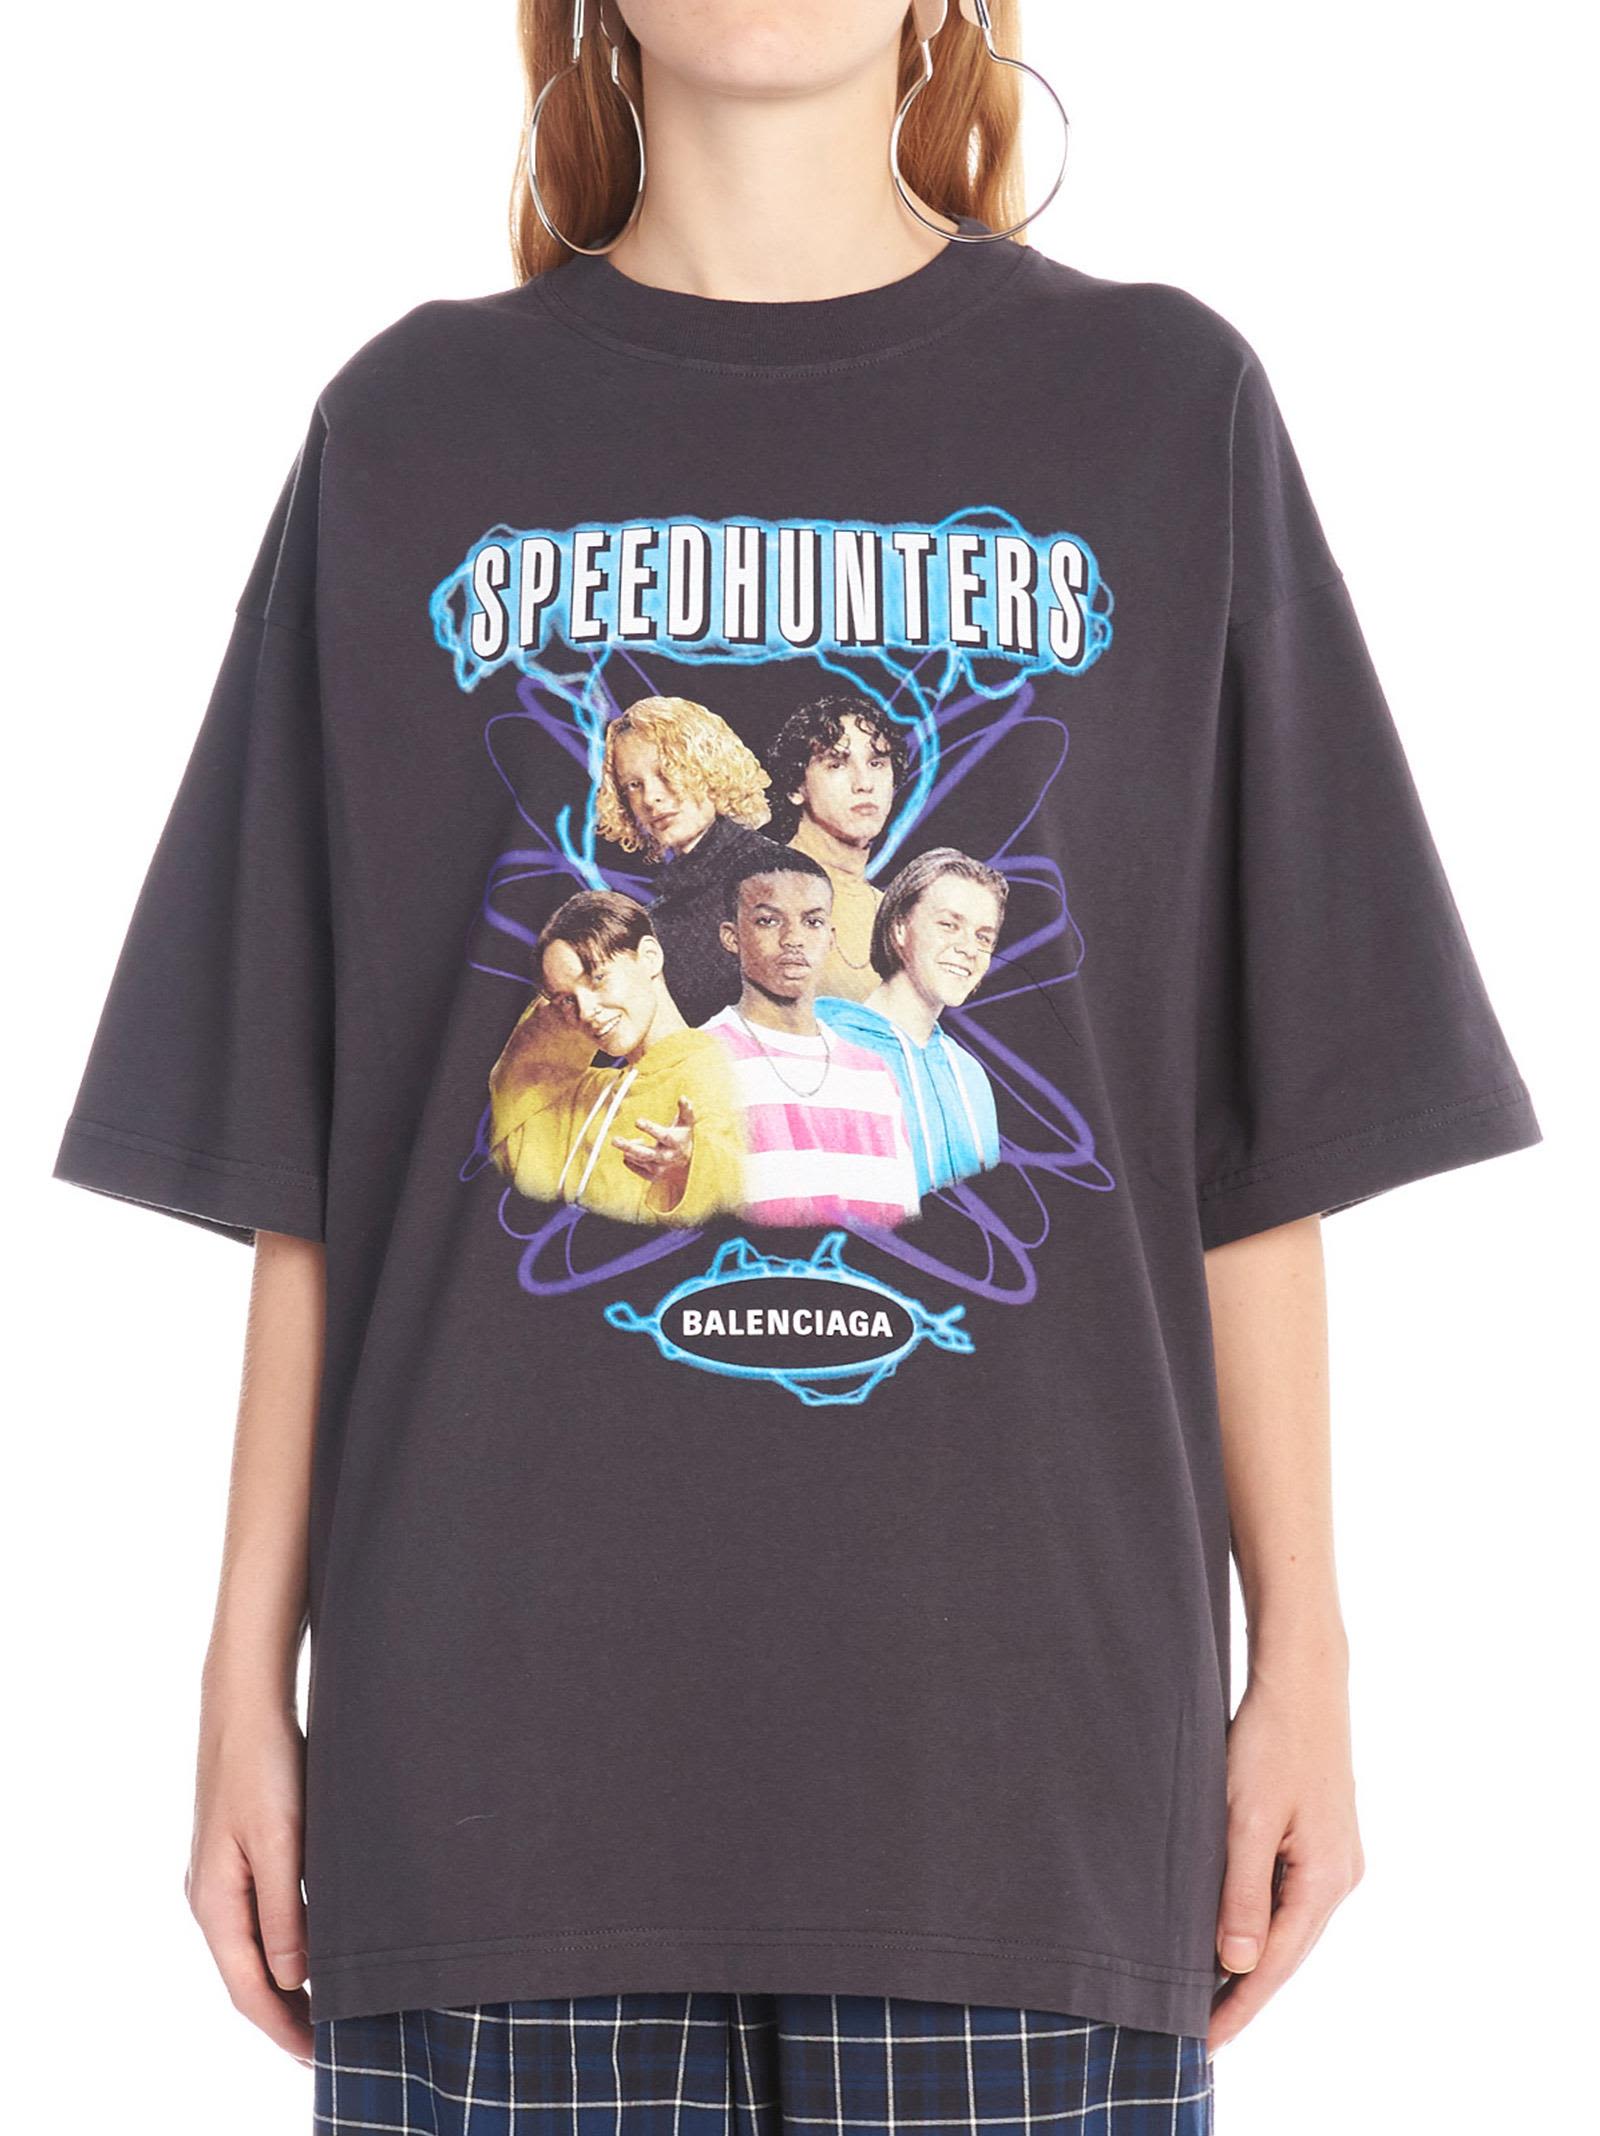 Balenciaga Speedhunter Shirt Luxury Apparel on Carousell